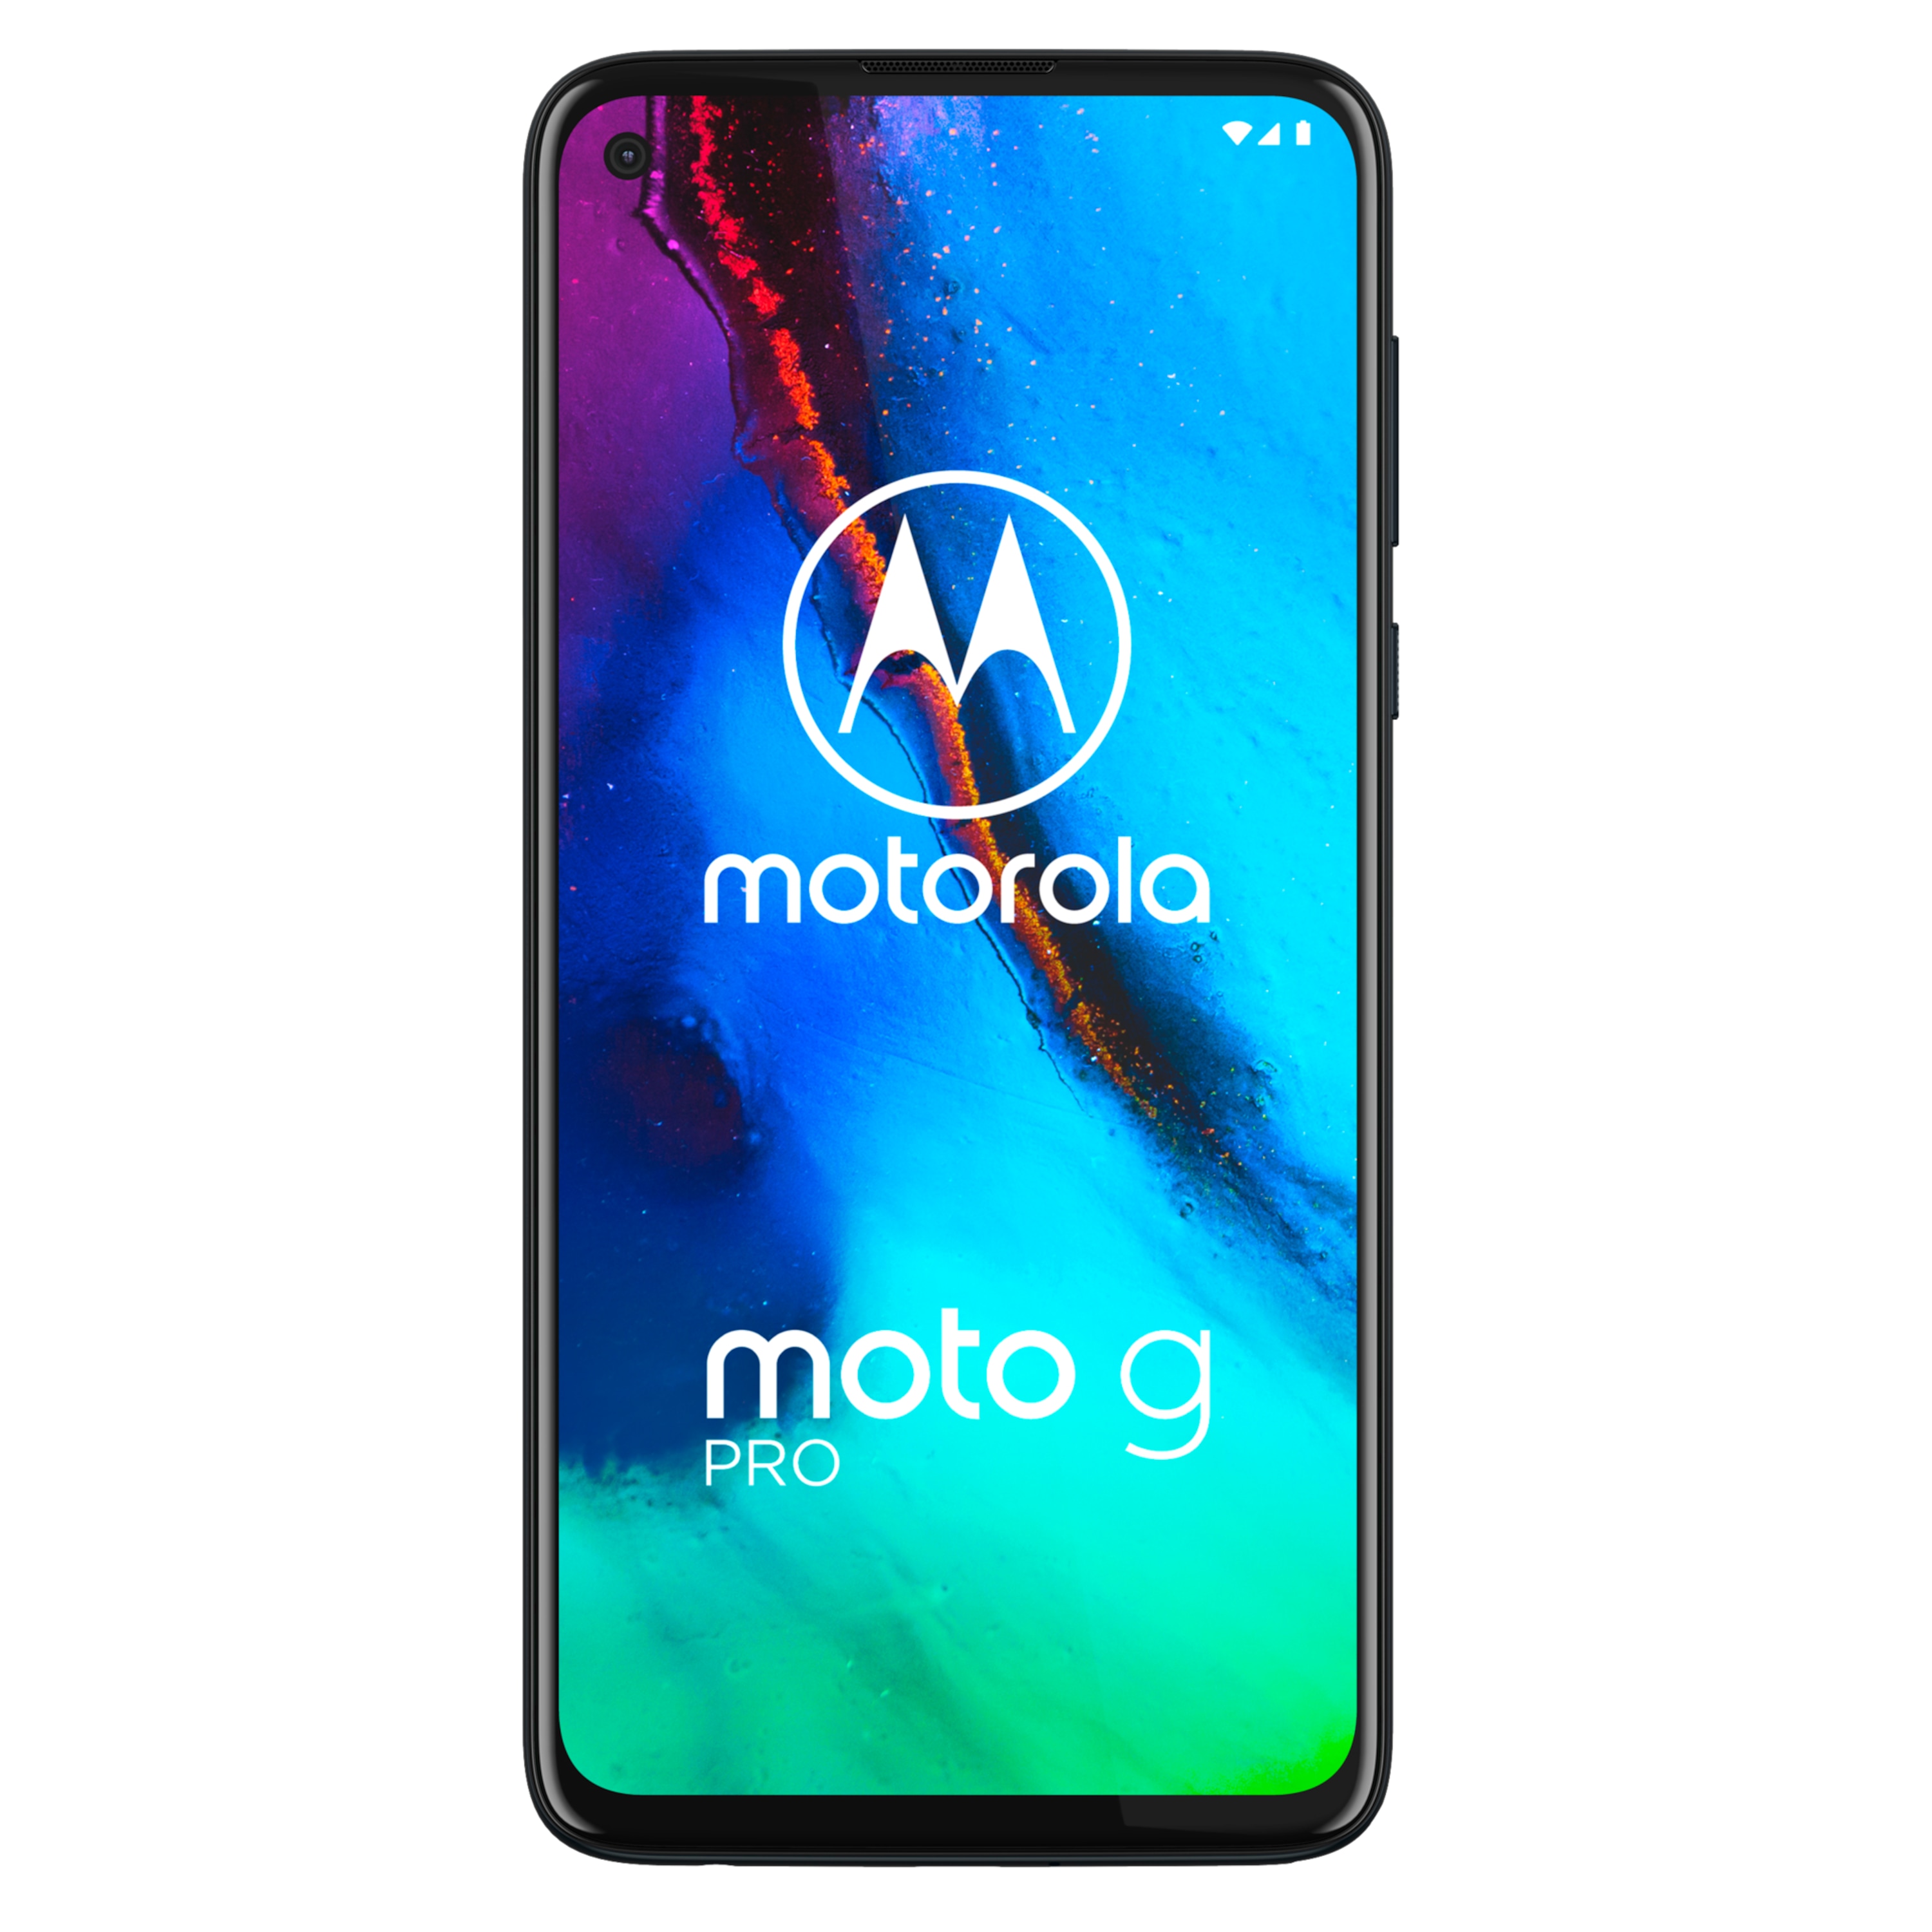 MOTOROLA moto g pro Smartphone, 16,25 cm (6,4") Full-HD+ Display, Android™ 10, 128 GB Speicher, Octa- Core-Prozessor, Dual-SIM, Bluetooth® 5.0